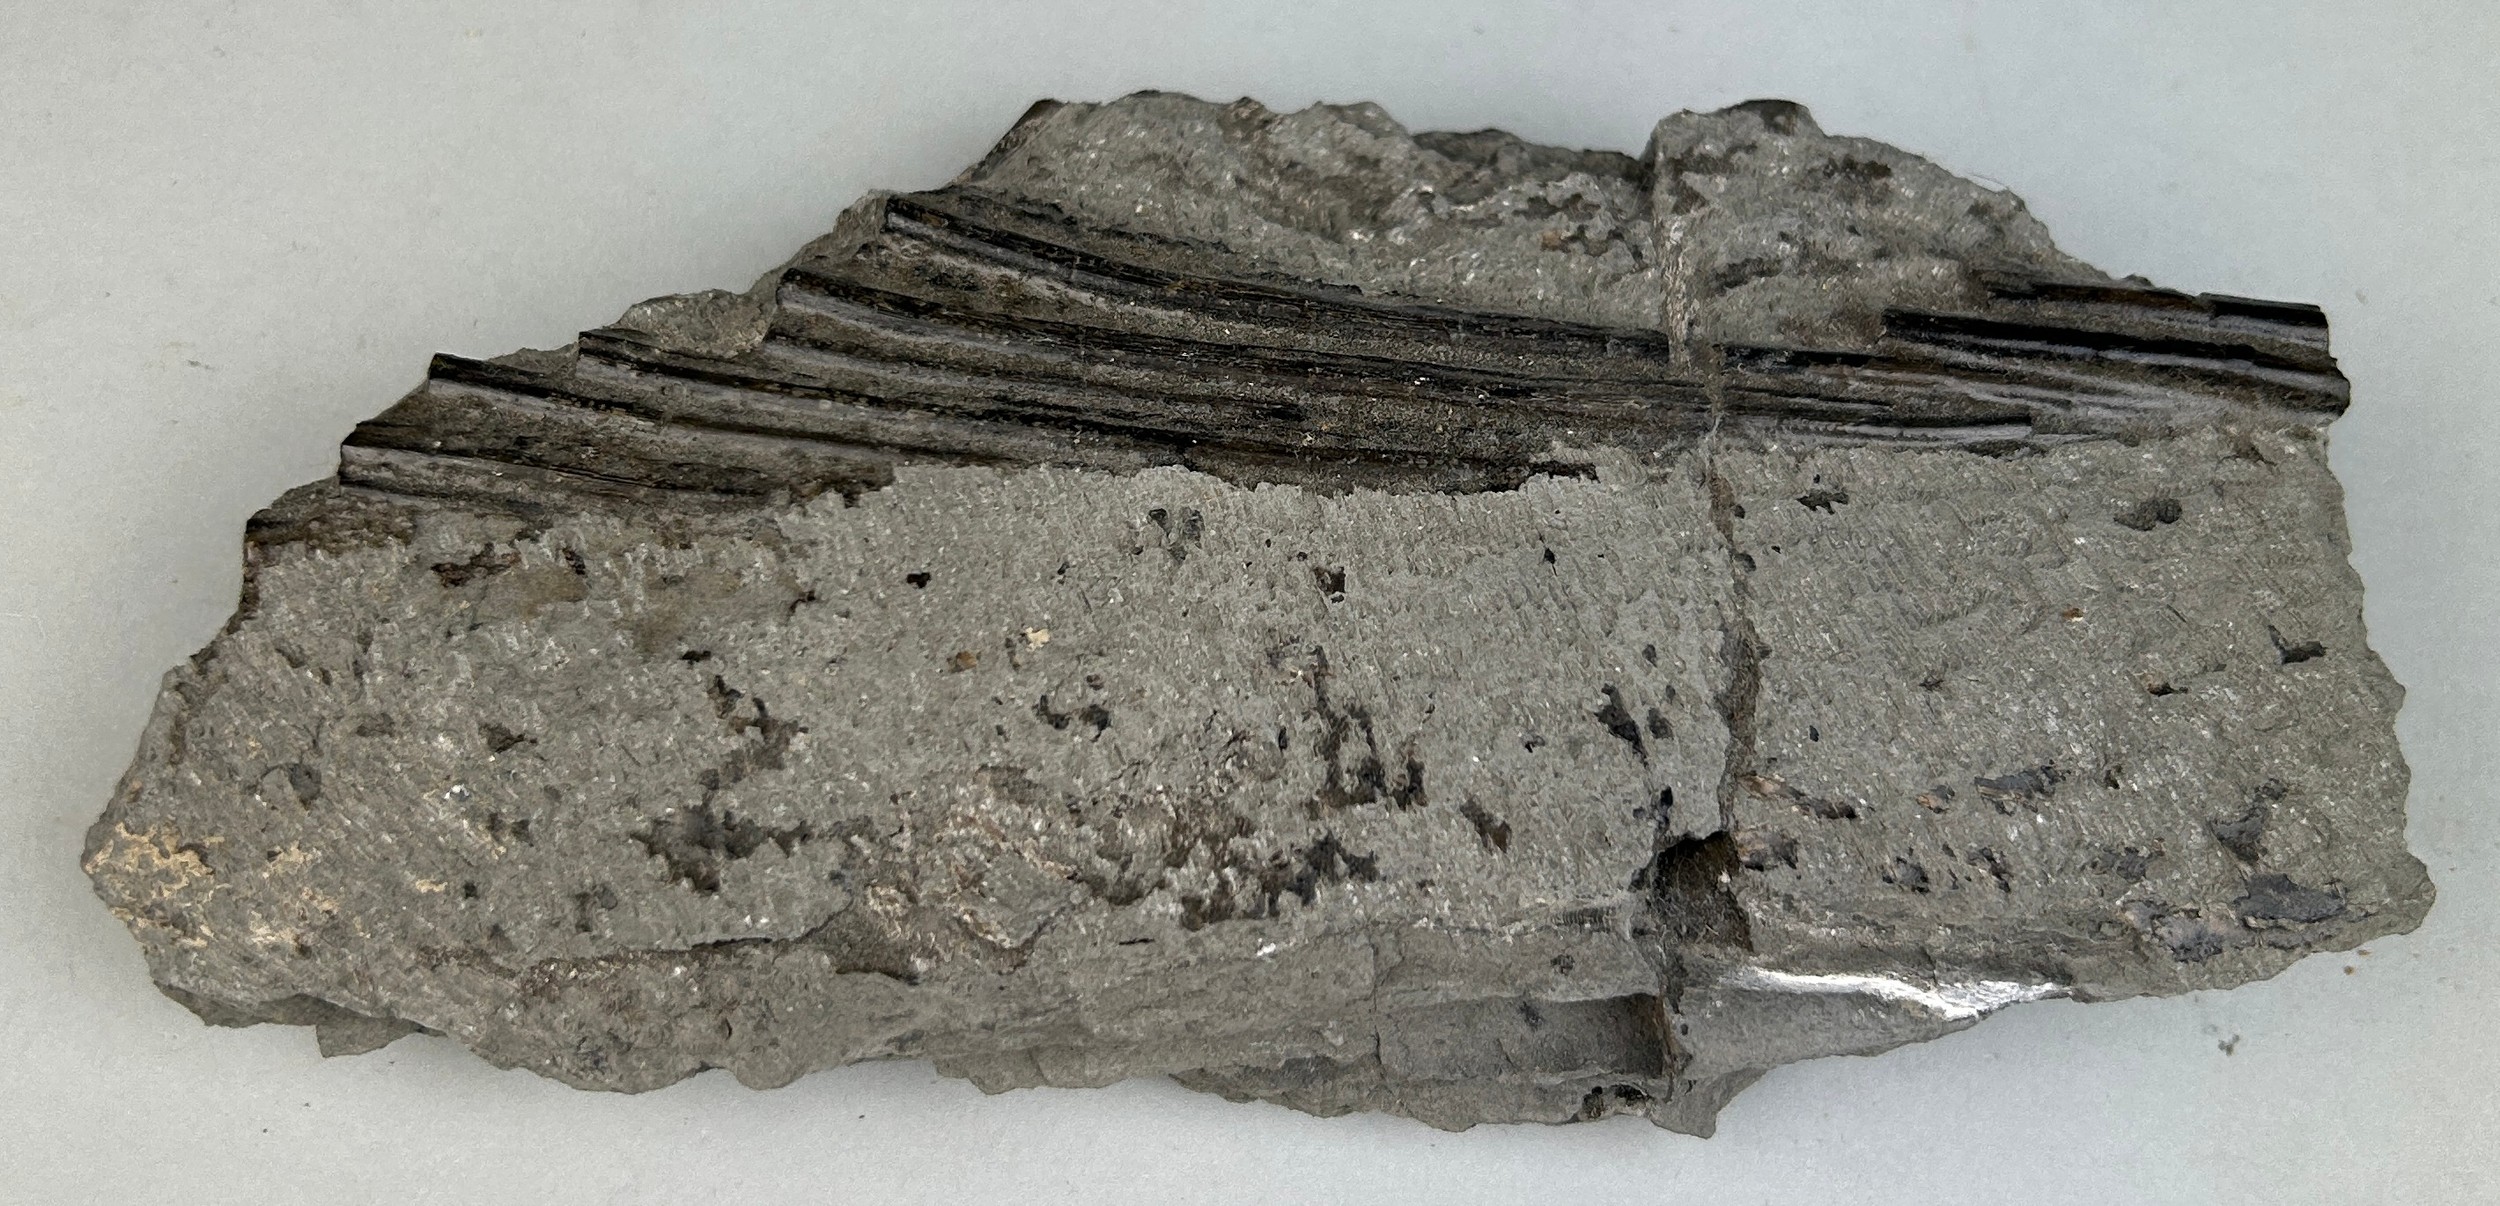 FOSSIL ICHTHYOSAURUS MARINE DINOSAUR RIBS FROM LYME REGIS 16cm x 9cm From the Jurassic coast, - Image 2 of 4